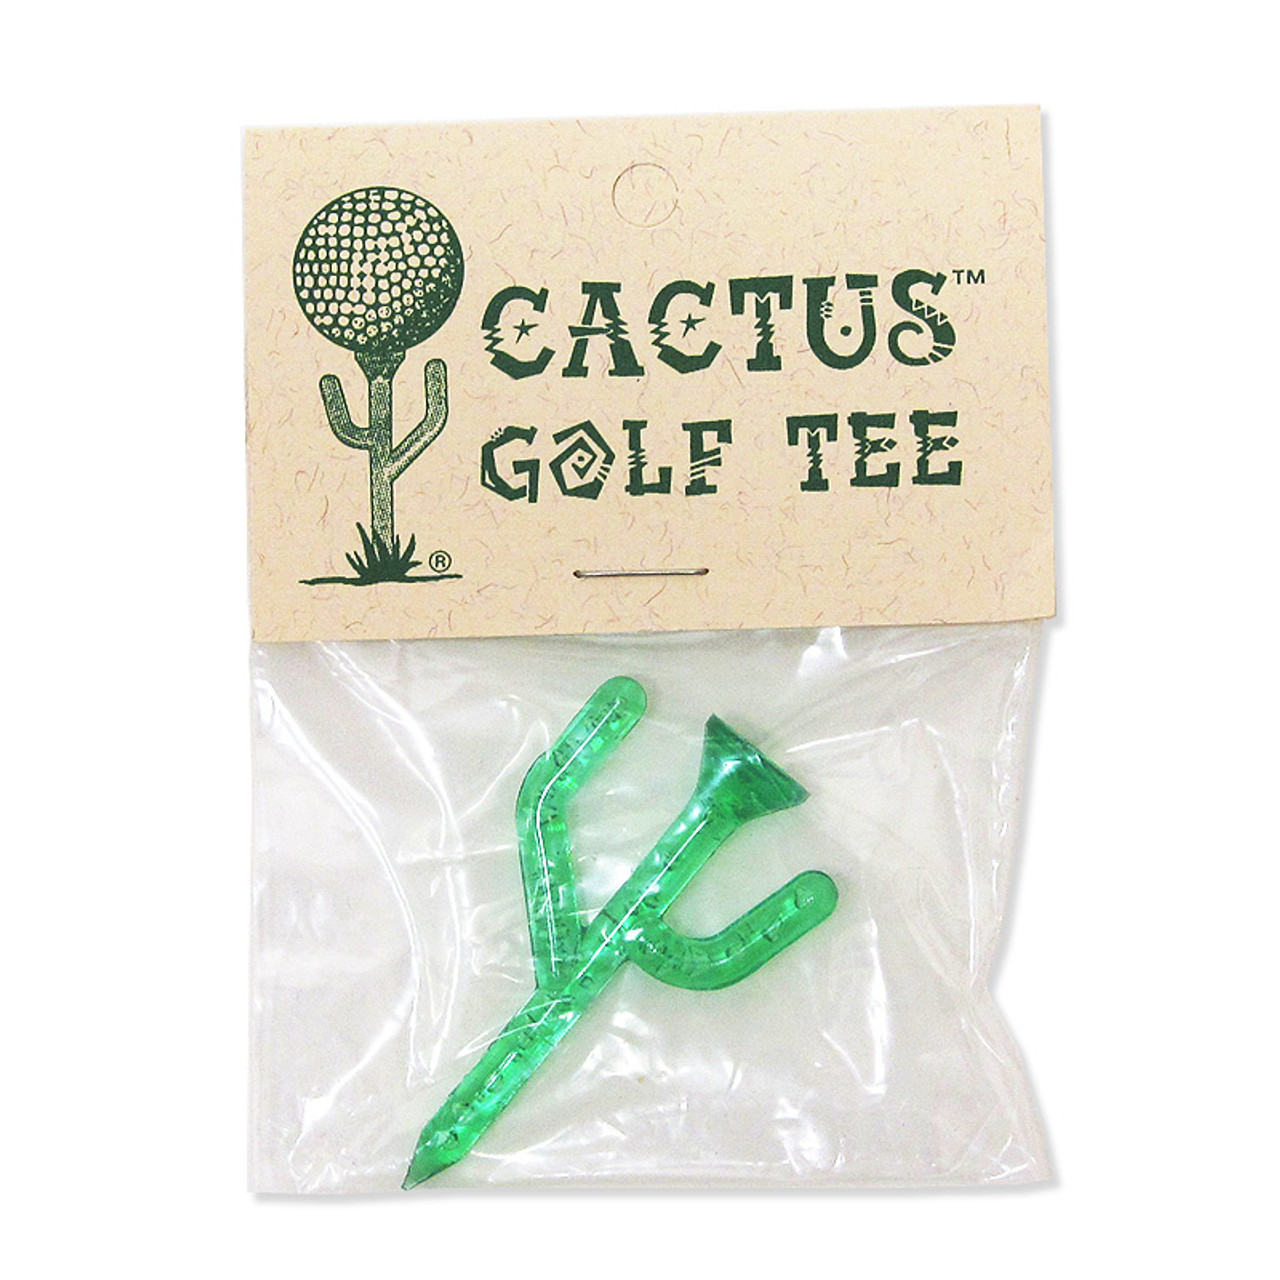 Cactus Golf Tee